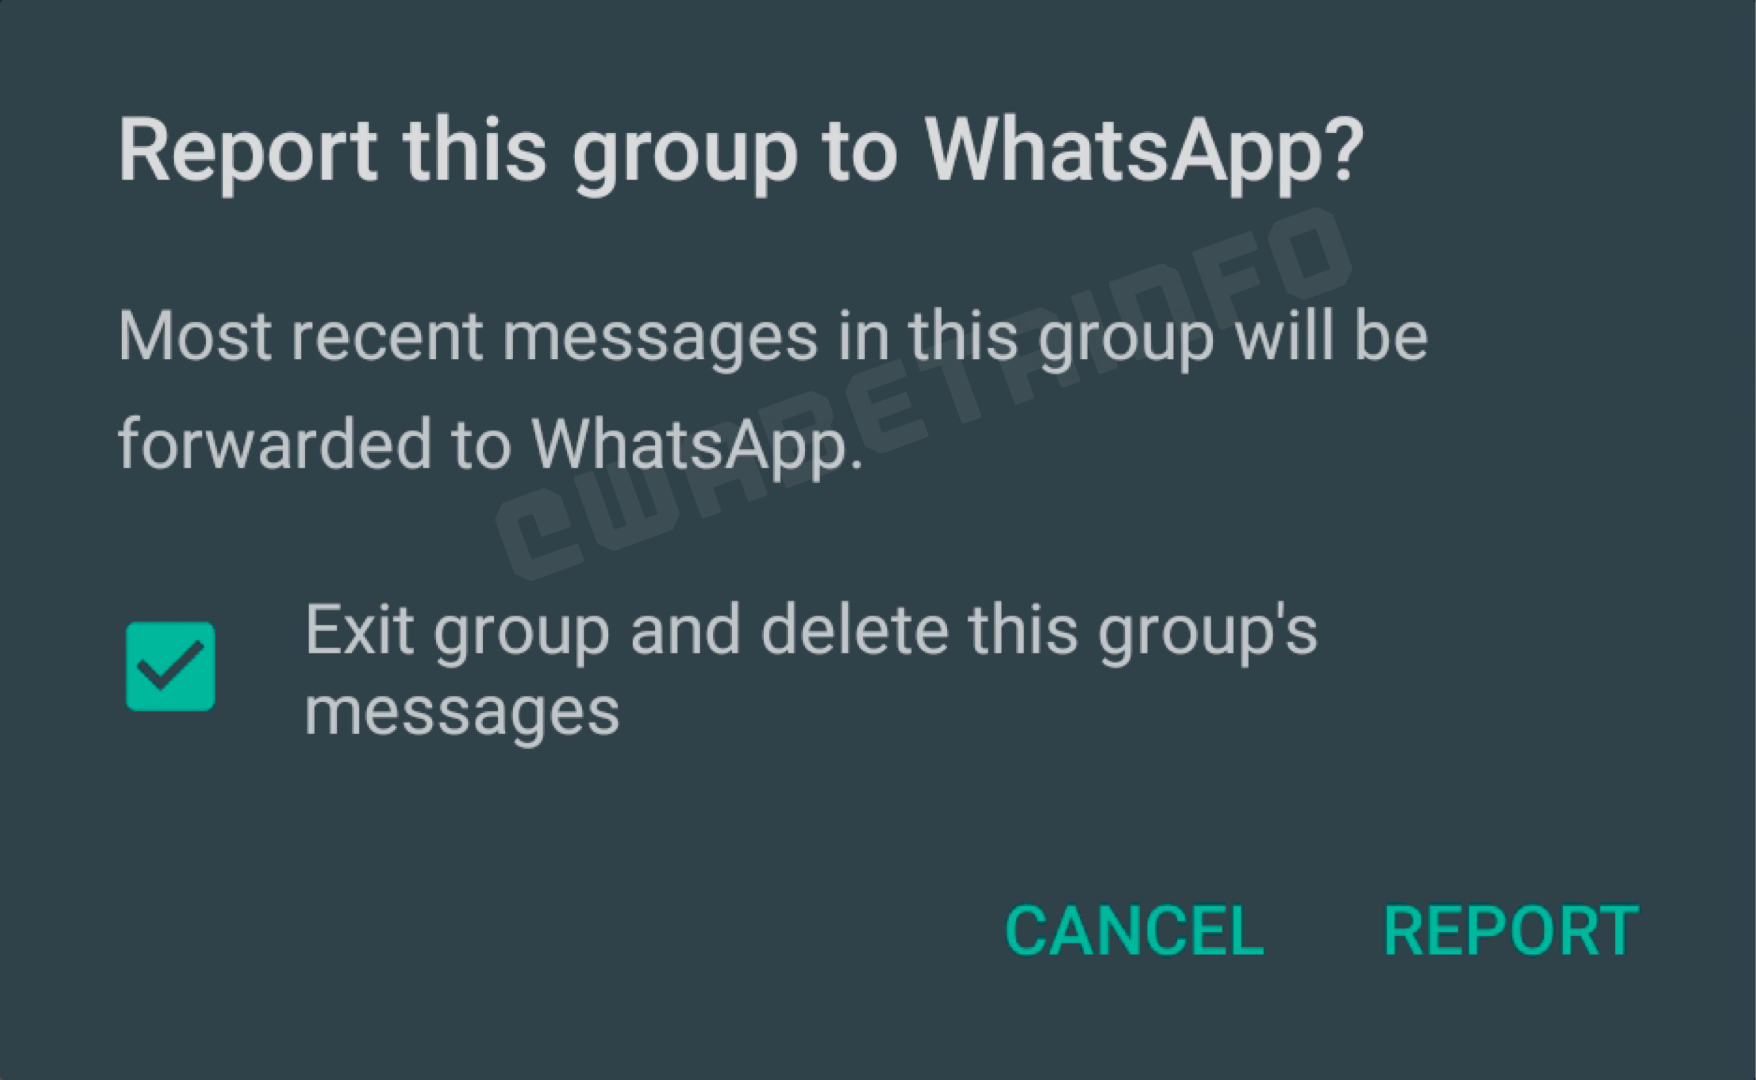 Plainte du groupe WhatsAppPlainte du groupe WhatsApp